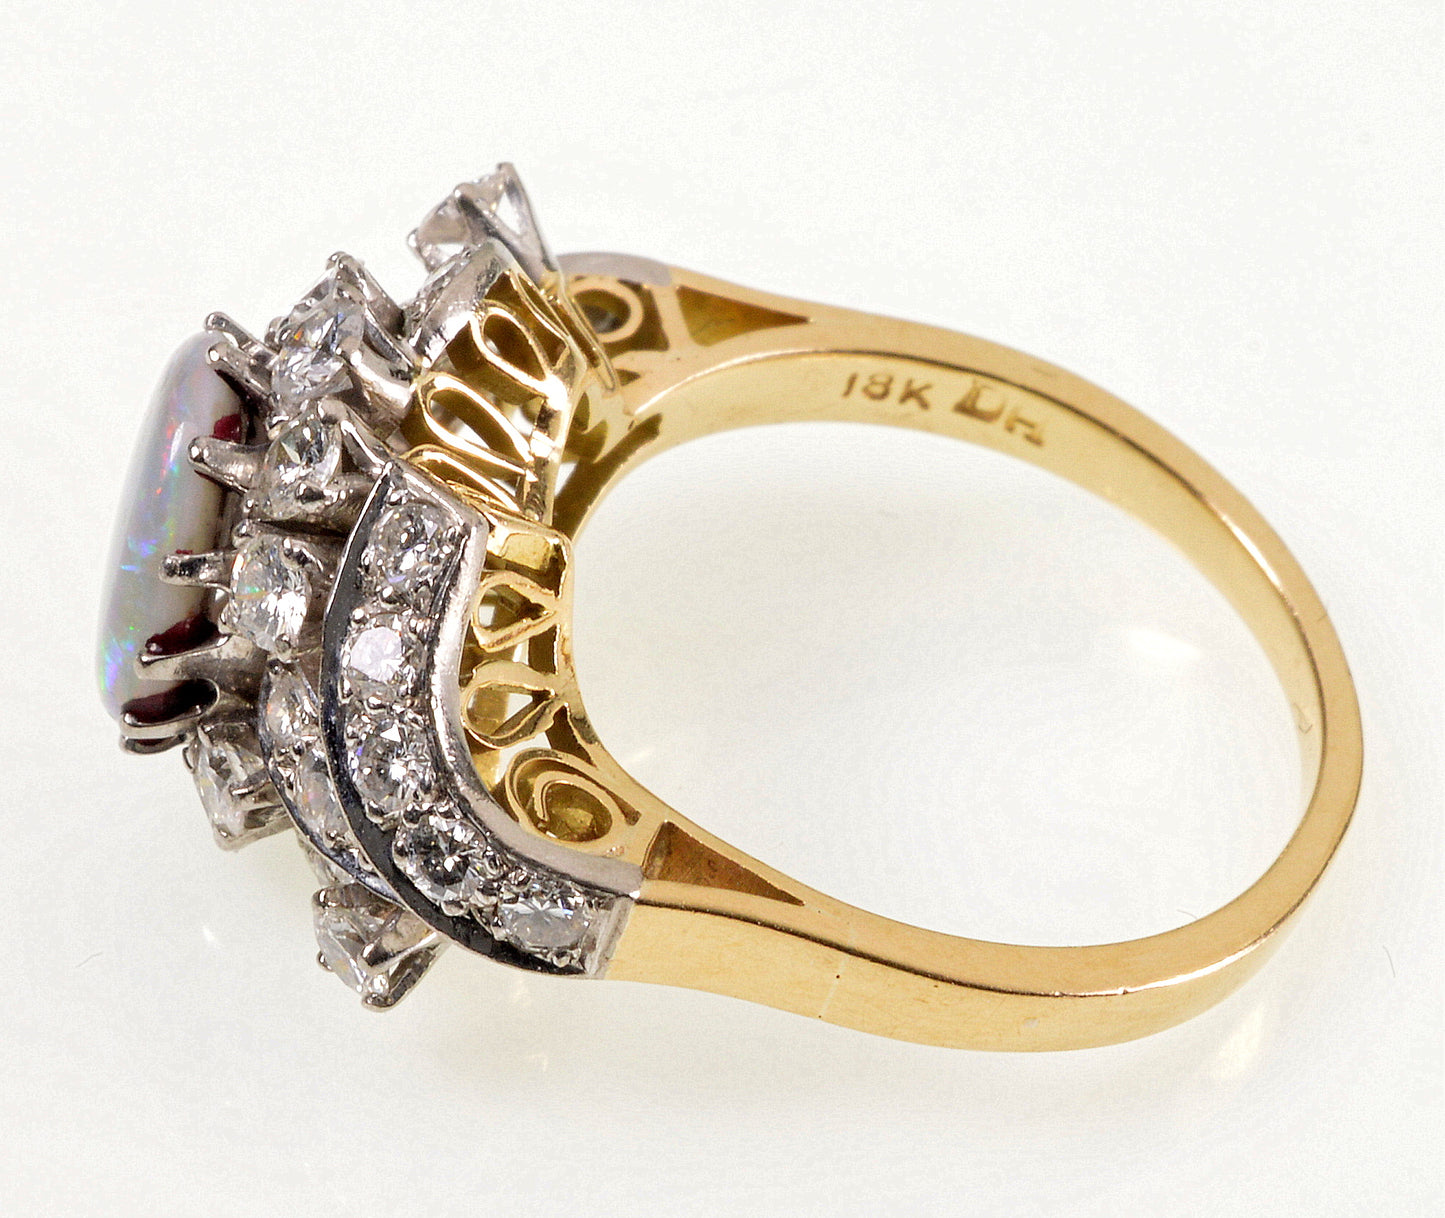 Antique Edwardian 18K Gold Opal Diamond Cocktail Ring C.1900